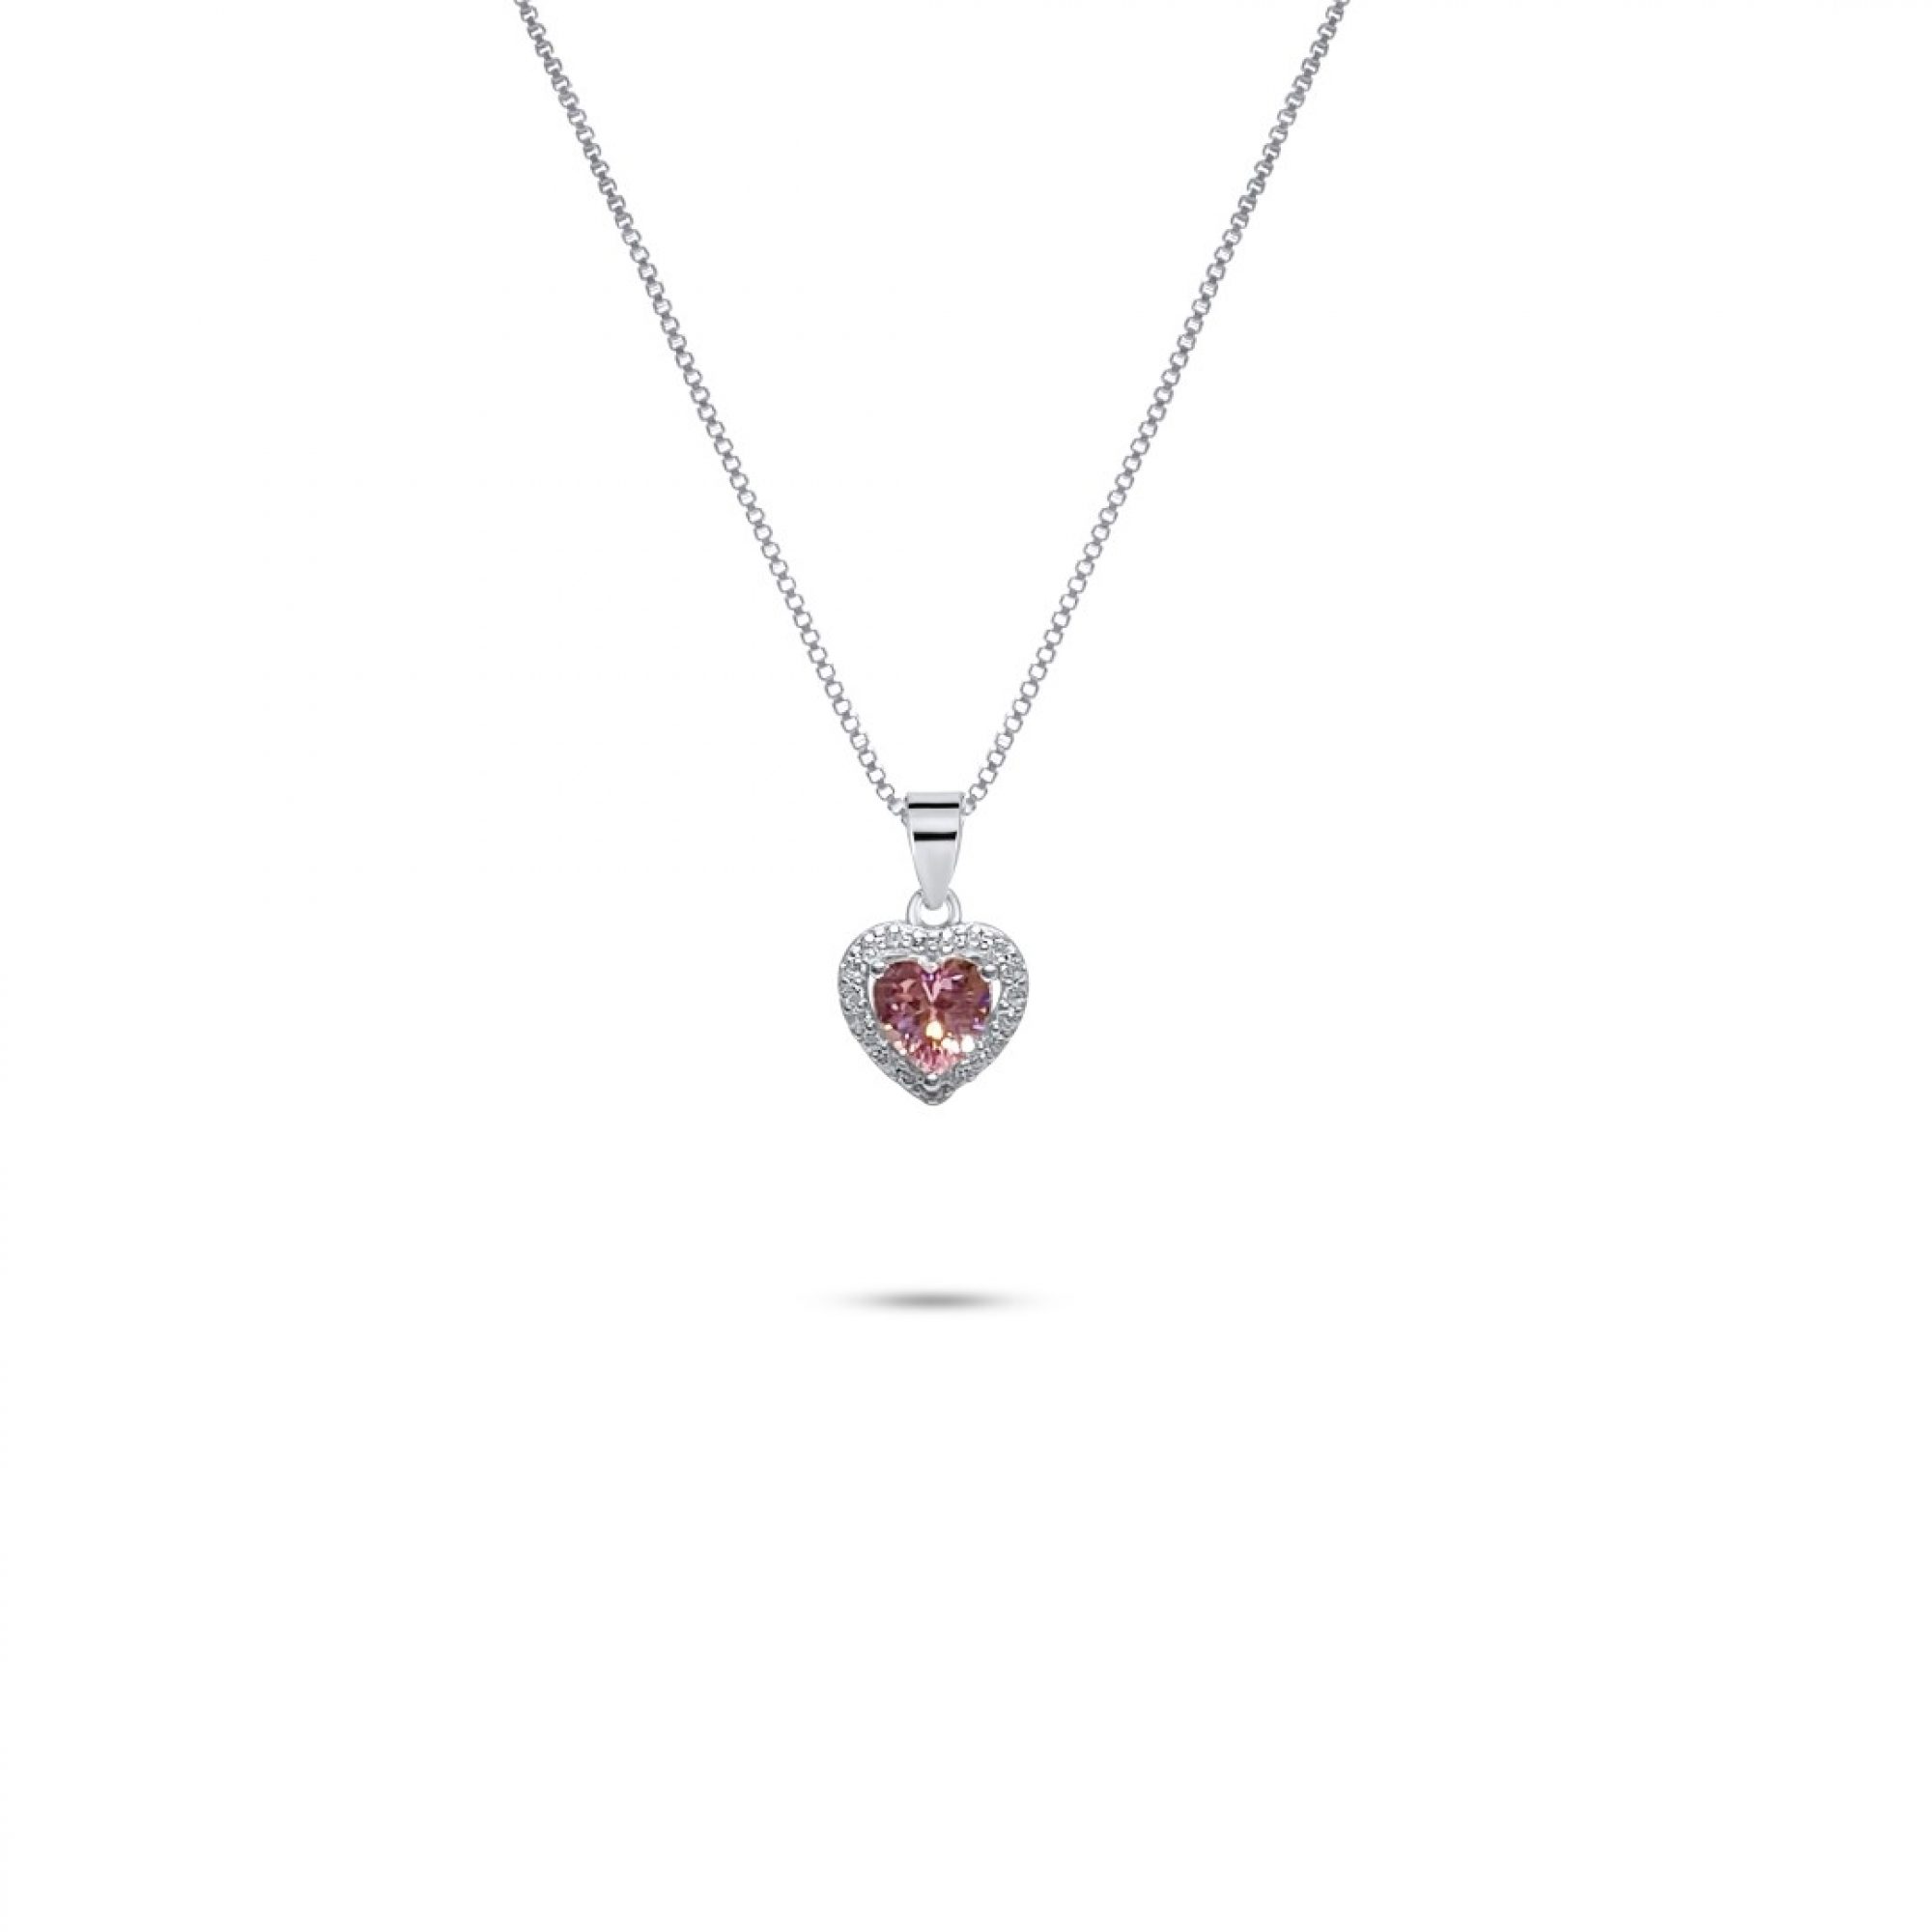 Heart necklace with pink quartz and zircon stones